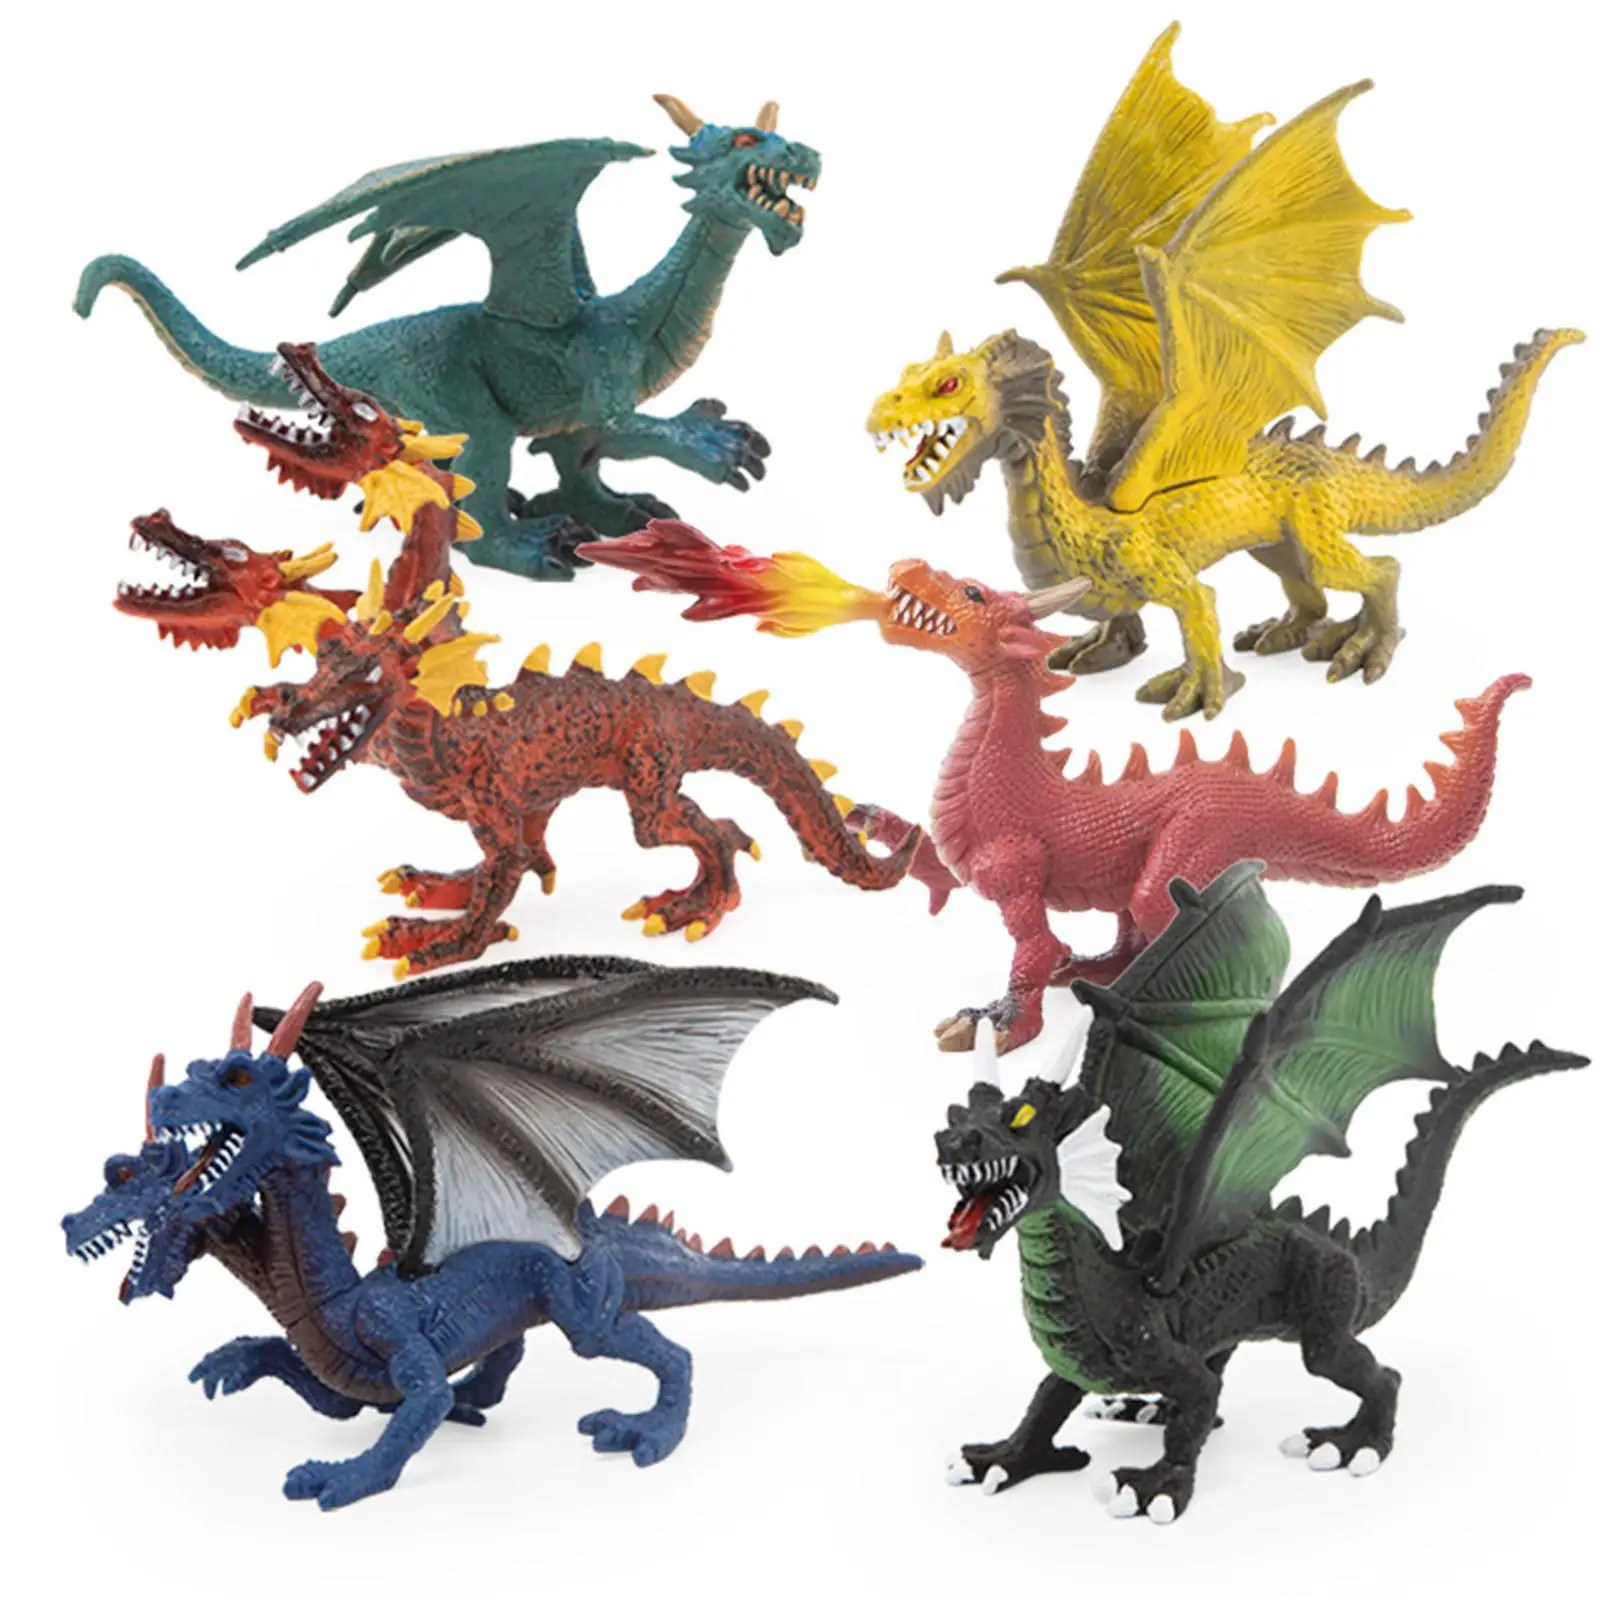 6x Dragon Figurines Dragon Statue Colorful Realistic Figure Model for Rewards Collection Science Props Desktop Decor Party Favor